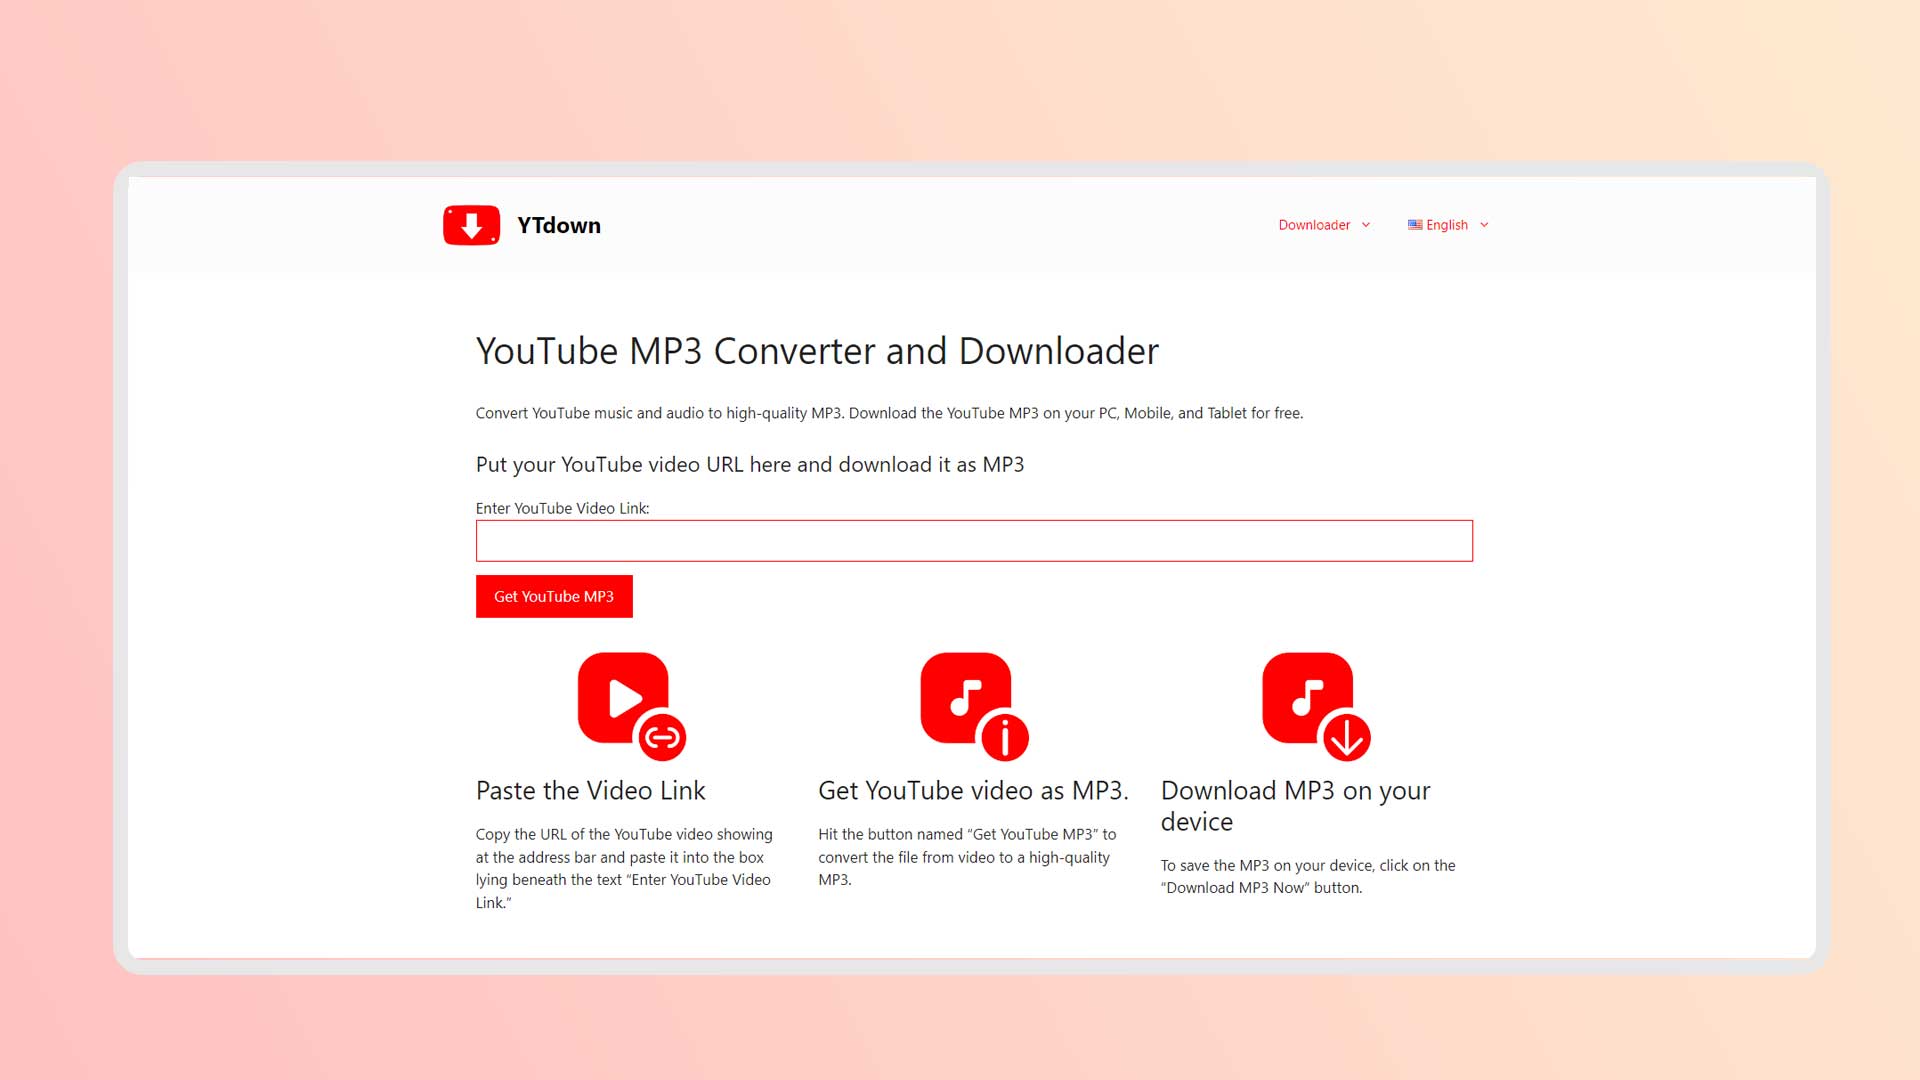 YTdown Ytdown - YouTube MP3 Downloader